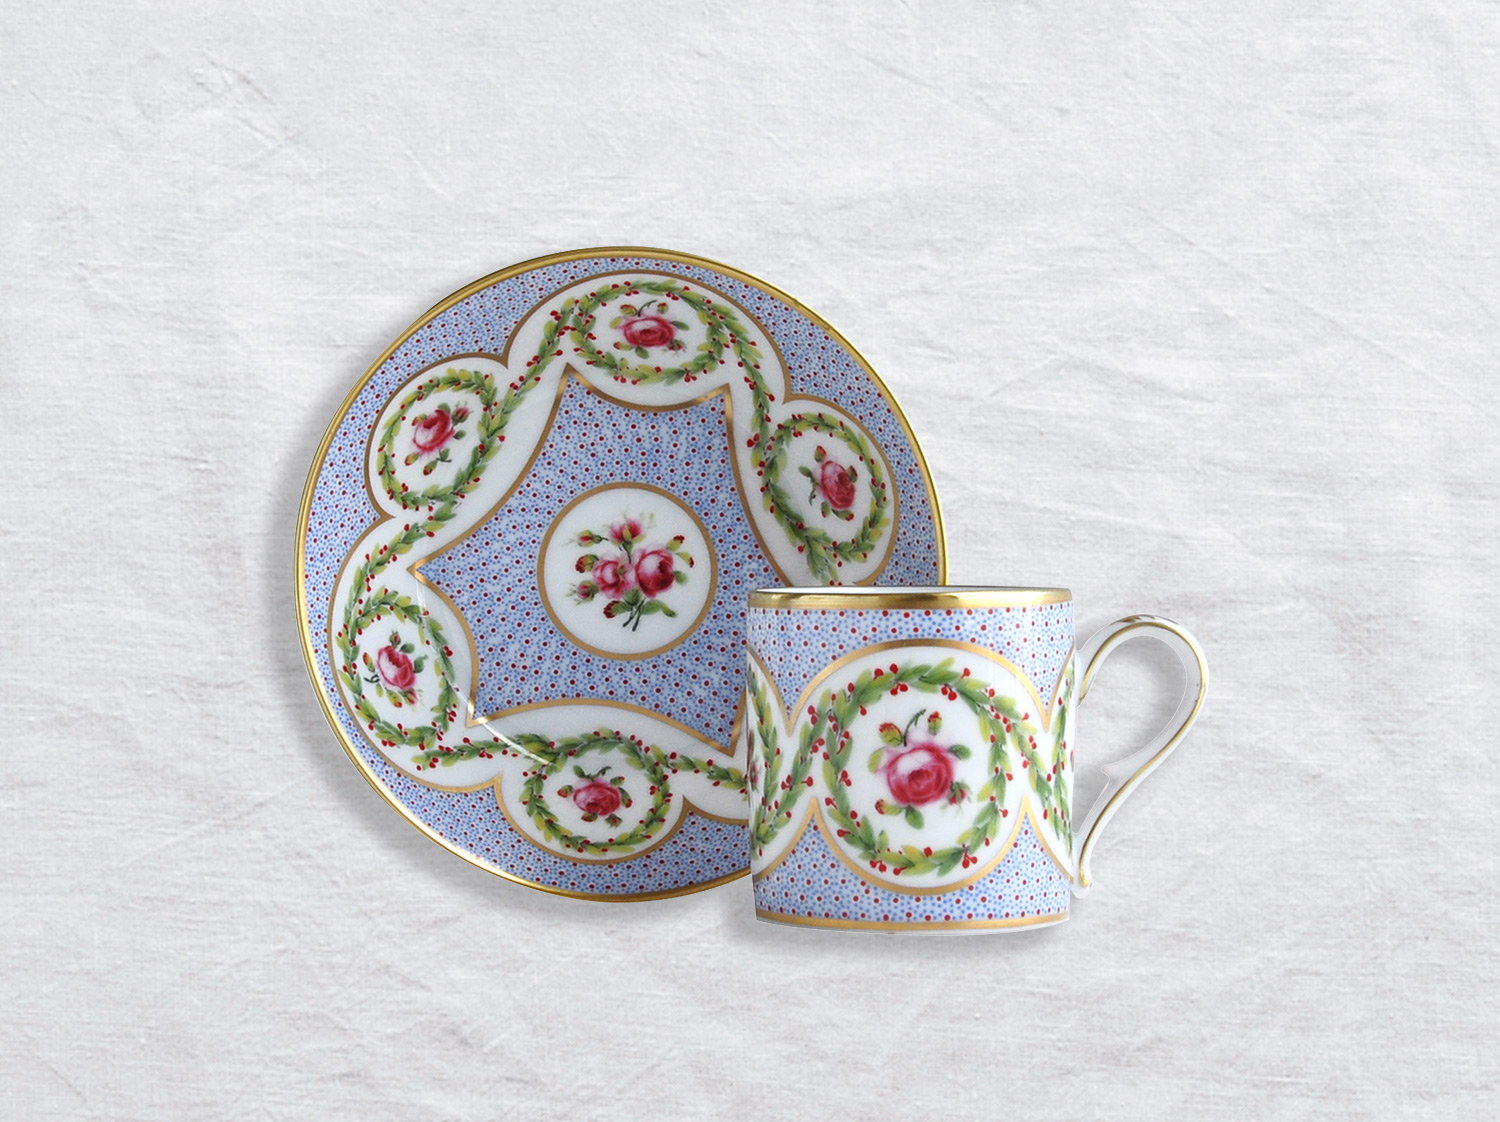 China Litron cup & saucer of the collection Myrtes et roses | Bernardaud